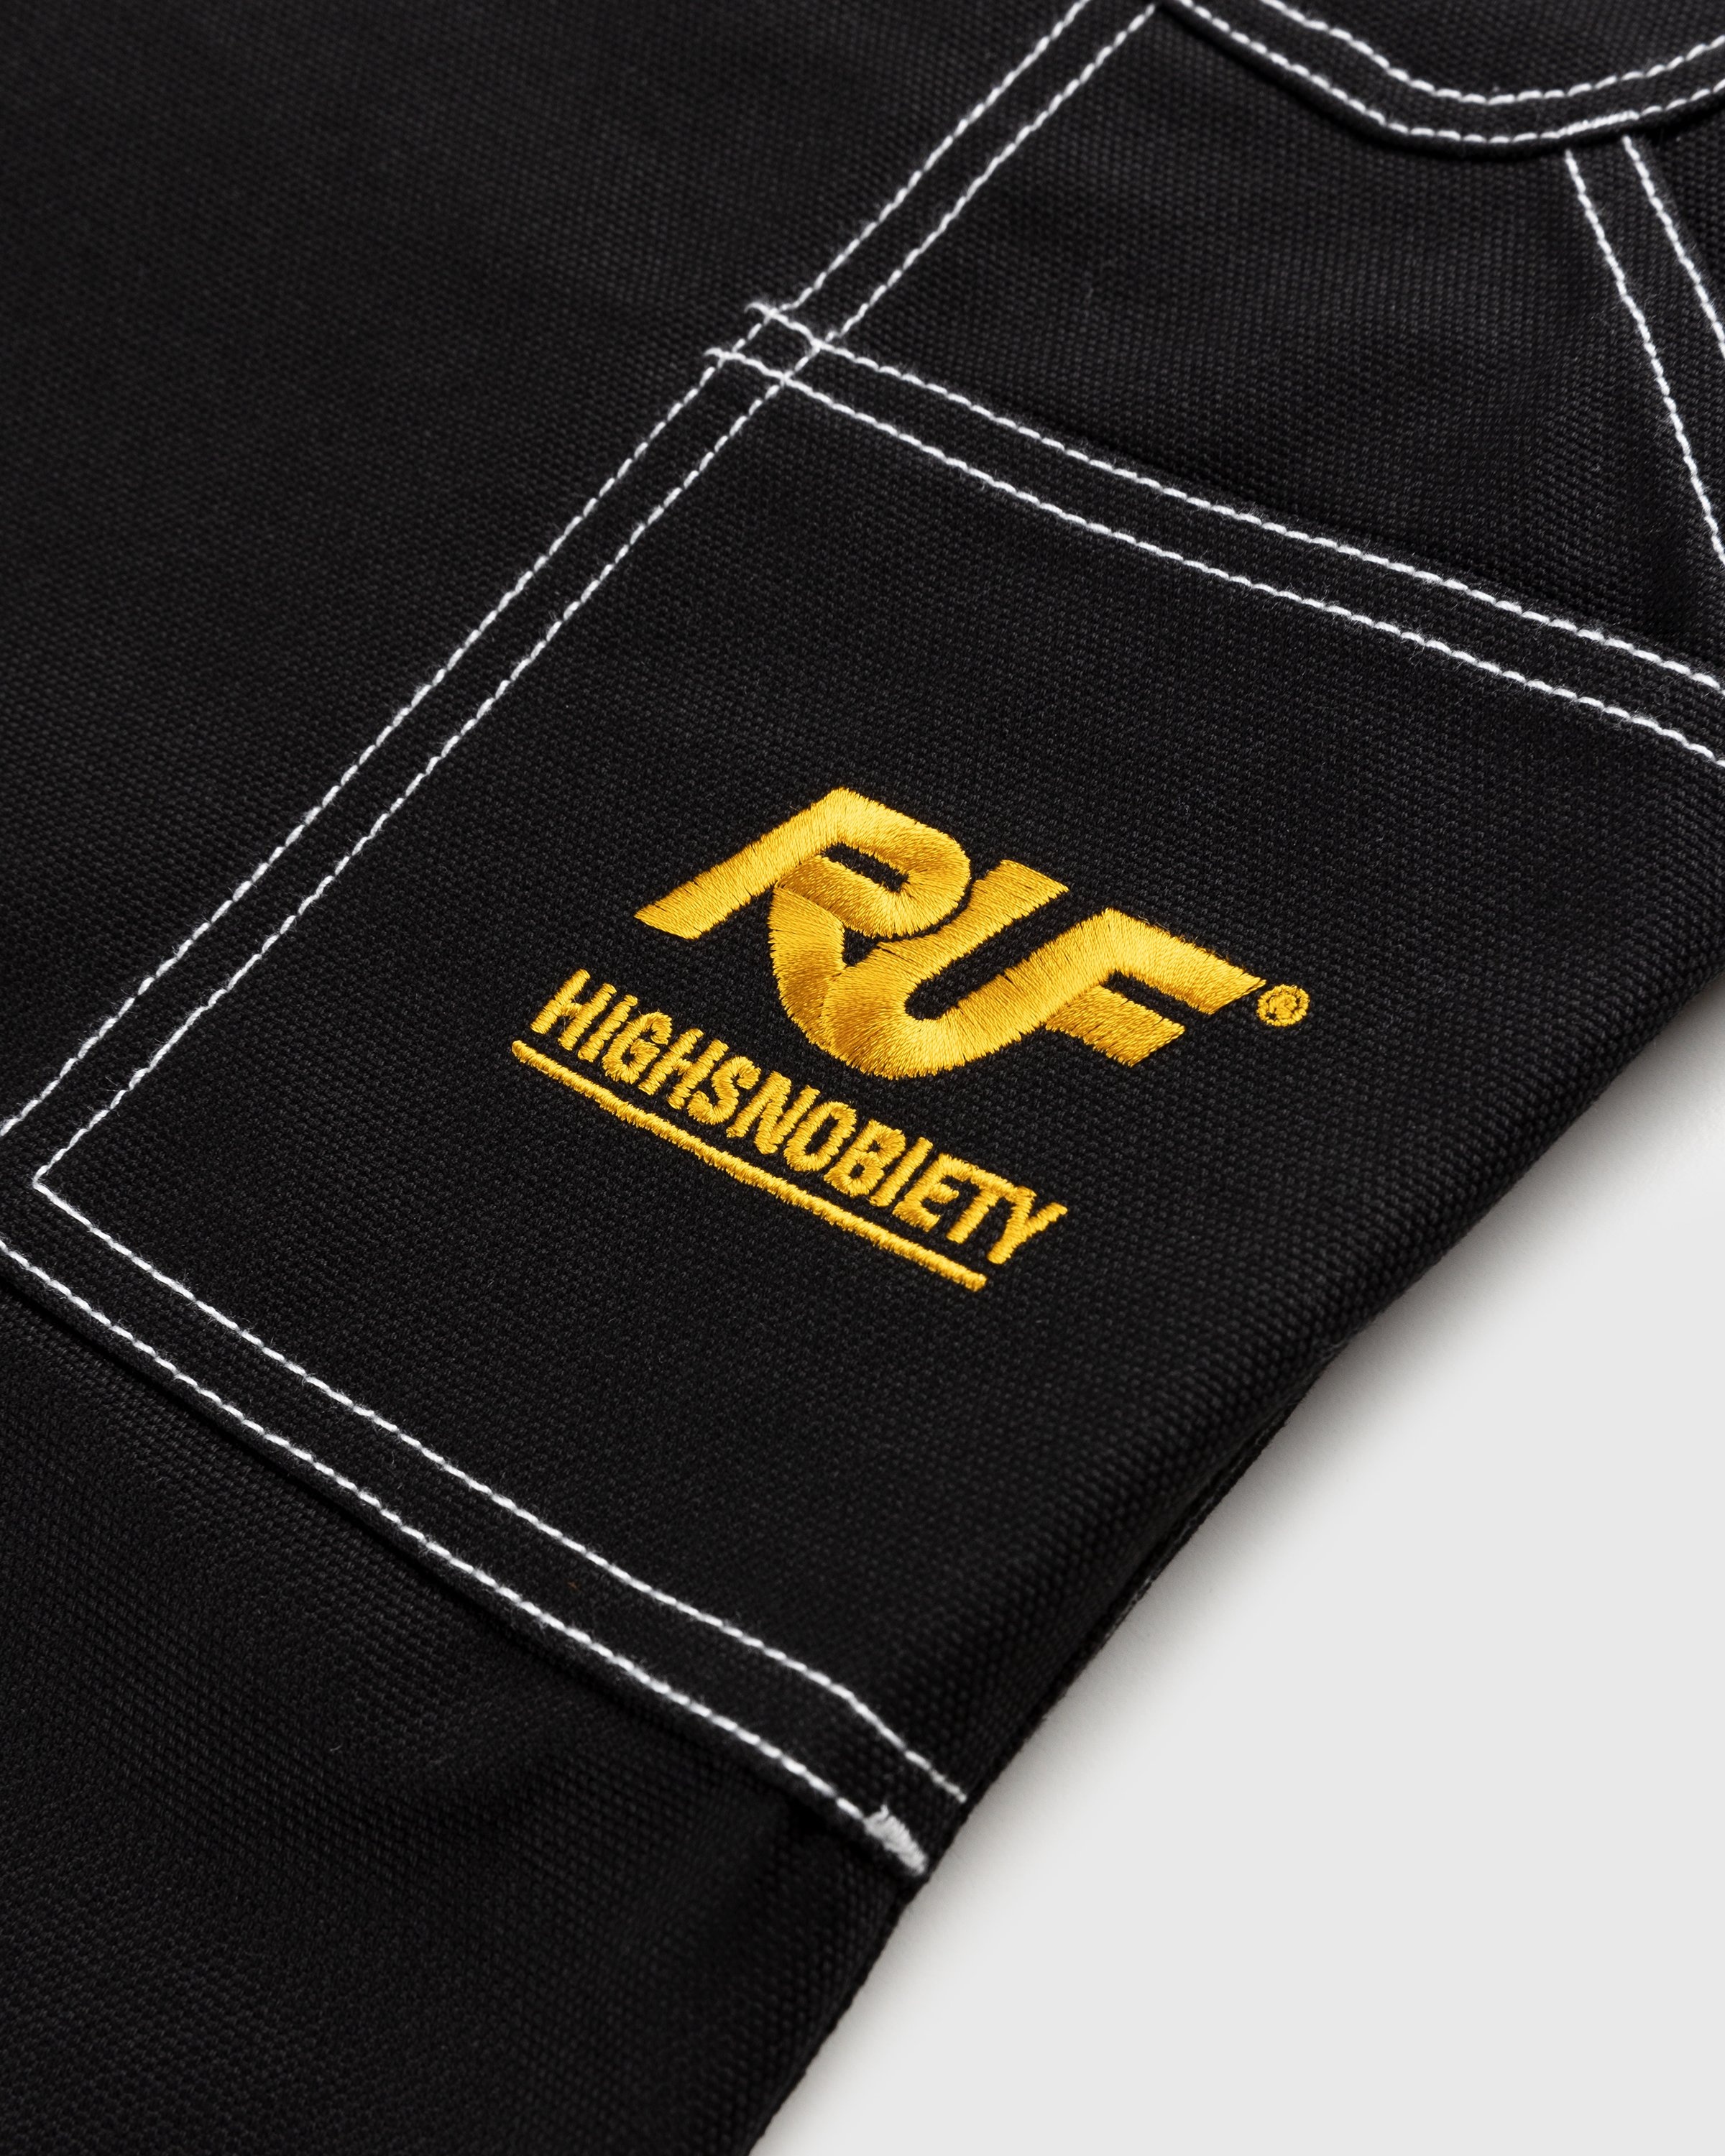 RUF x Highsnobiety – Cotton Work Pants Black - Pants - Black - Image 5